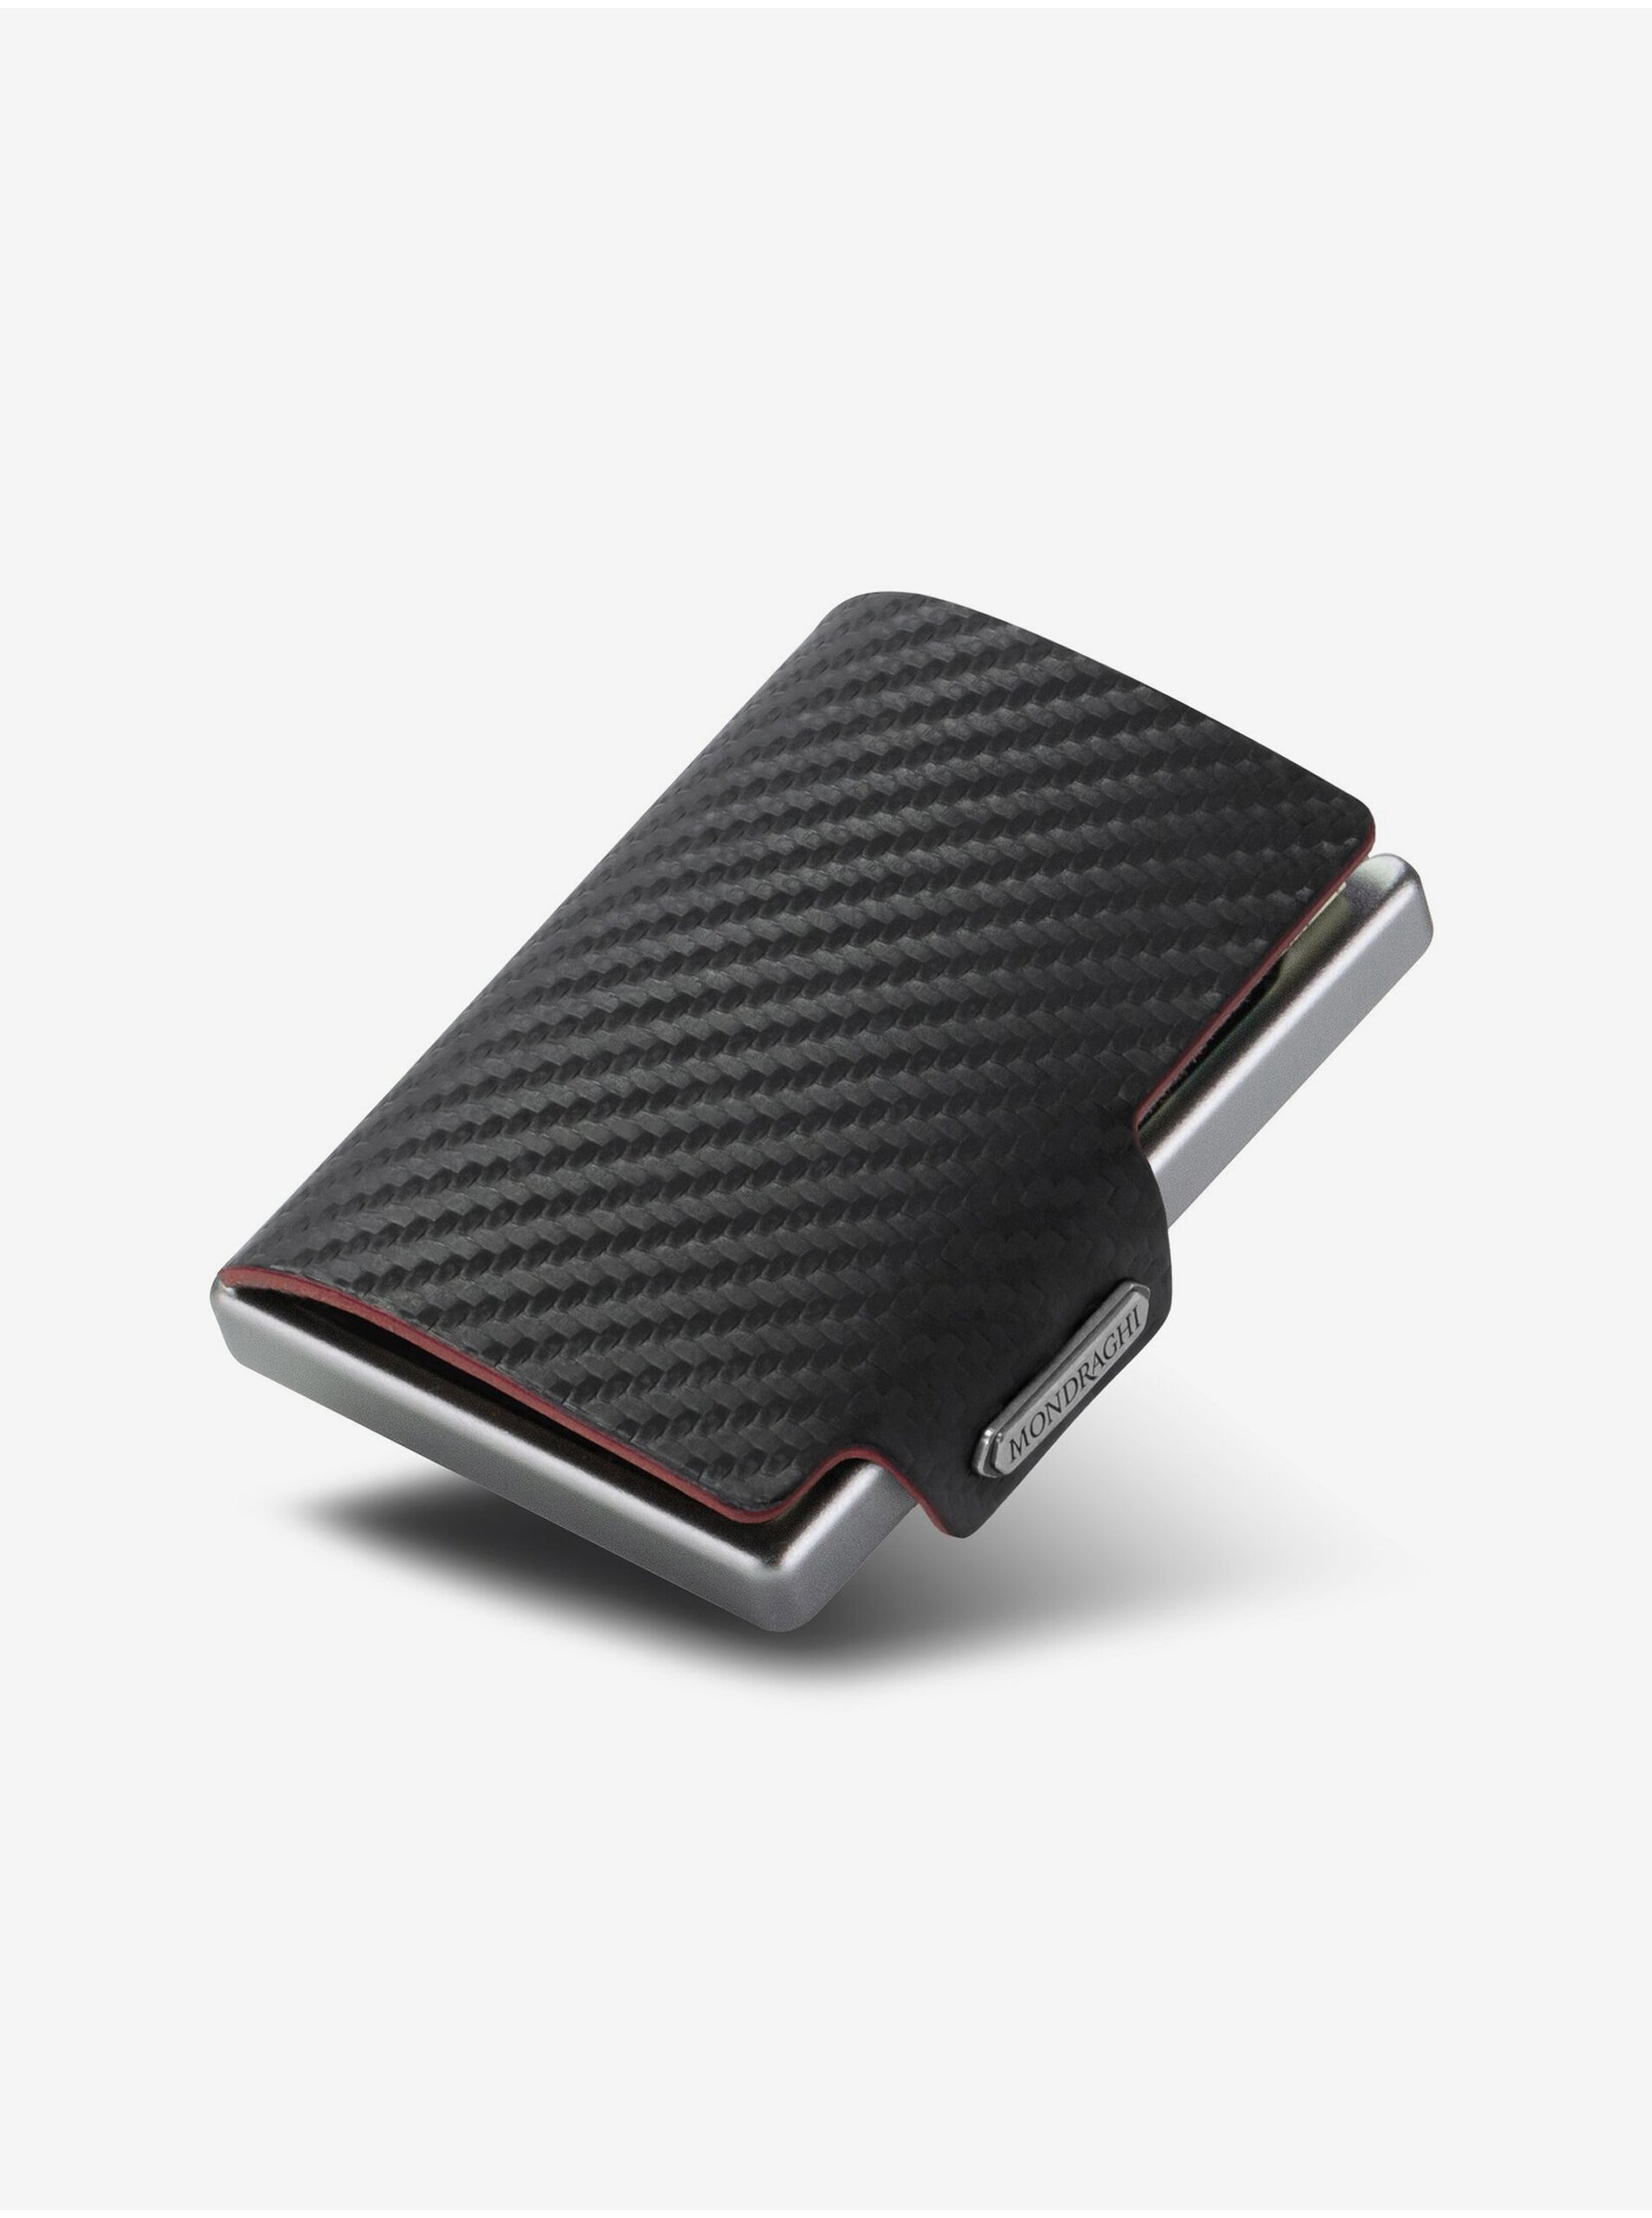 E-shop Černá vzorovaná kožená peněženka Mondraghi Carbon Plus